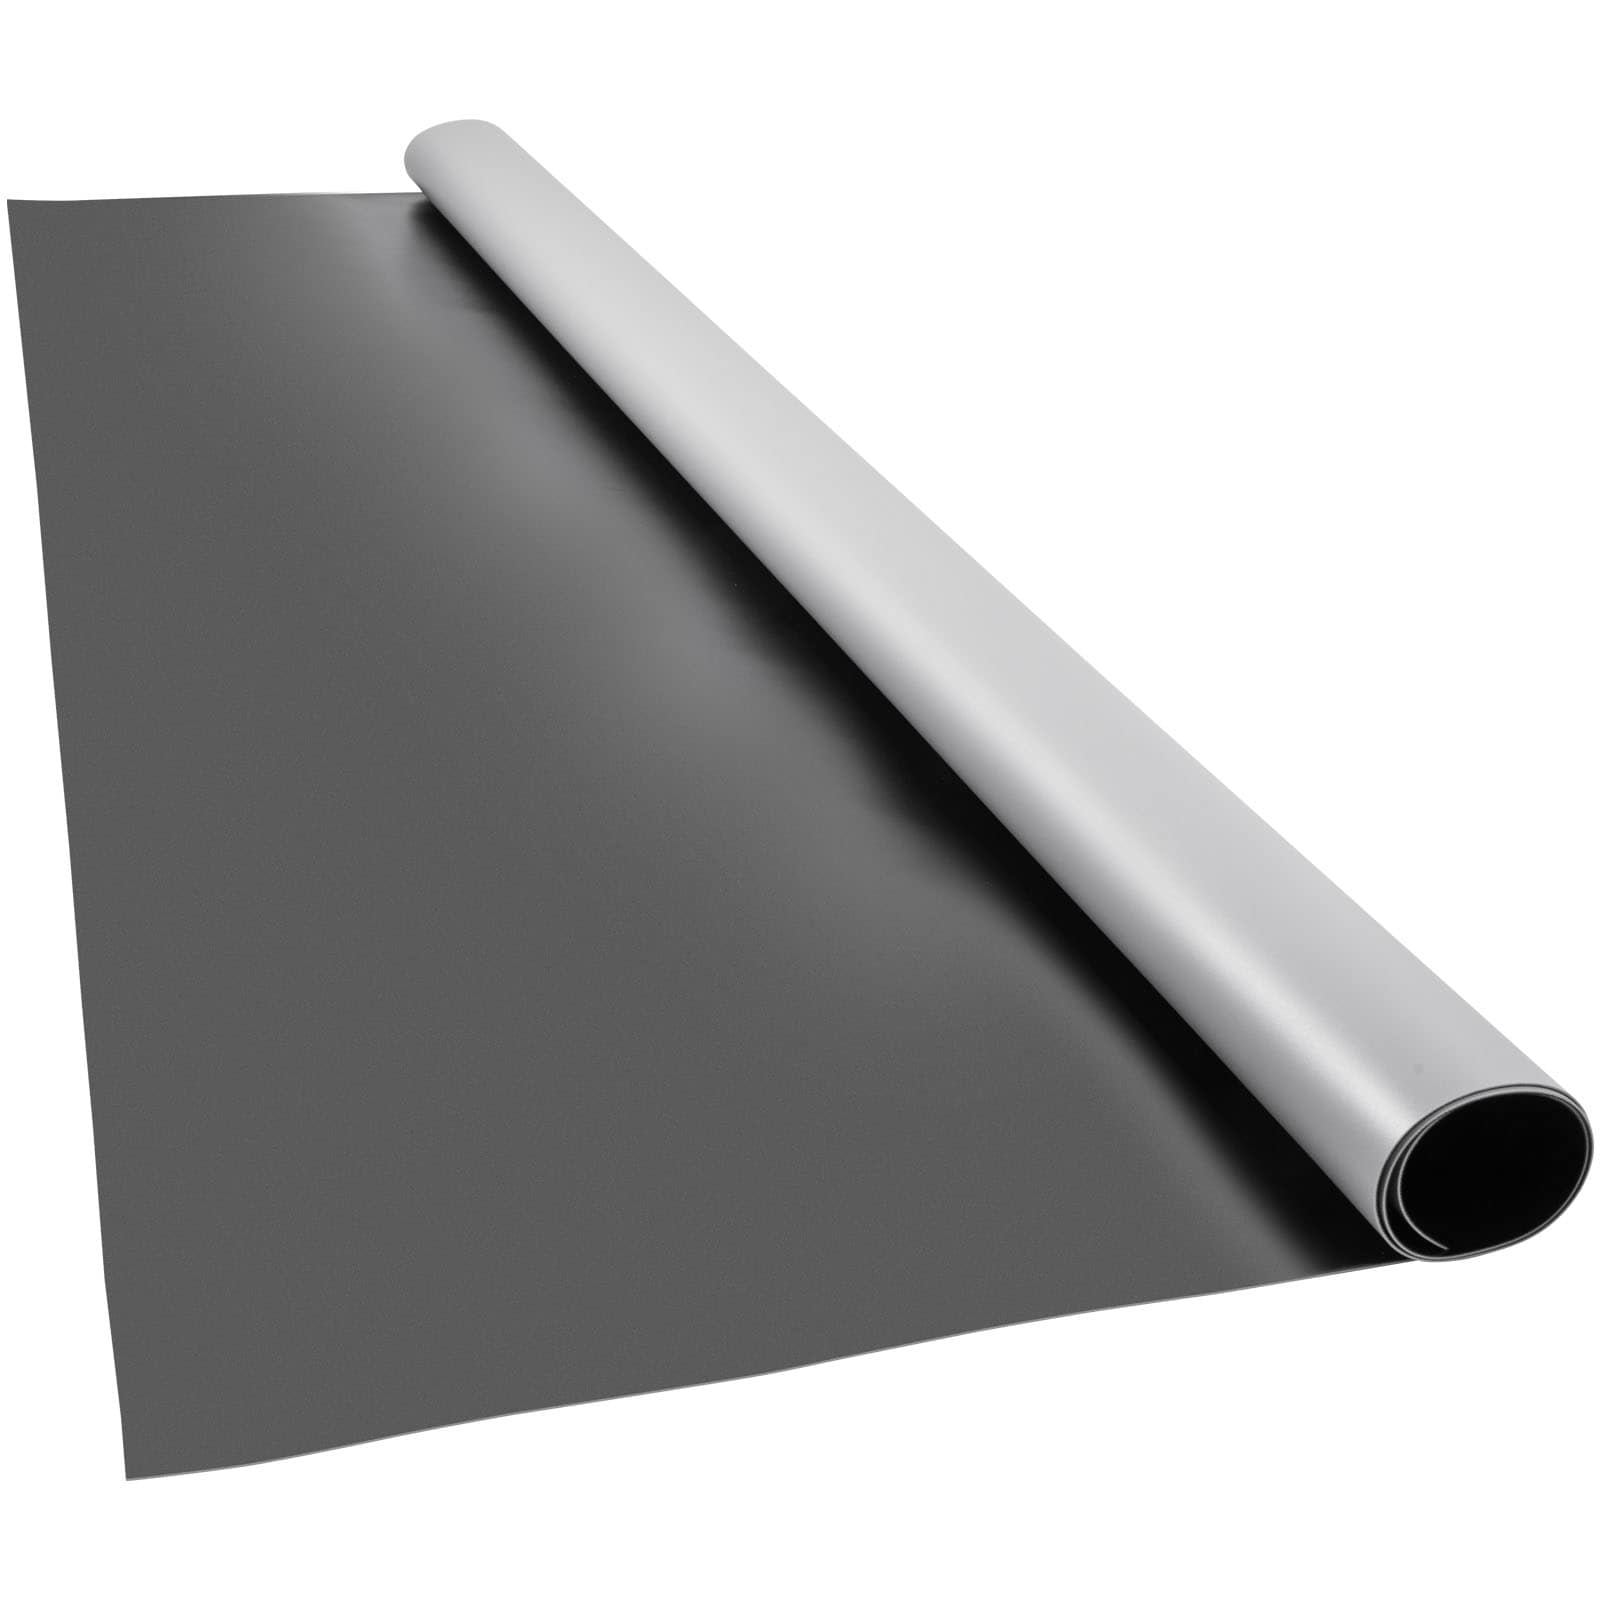 Waterproof 1.5mm PVC Garage Floor Mat Anti-Slip Rubber Flooring